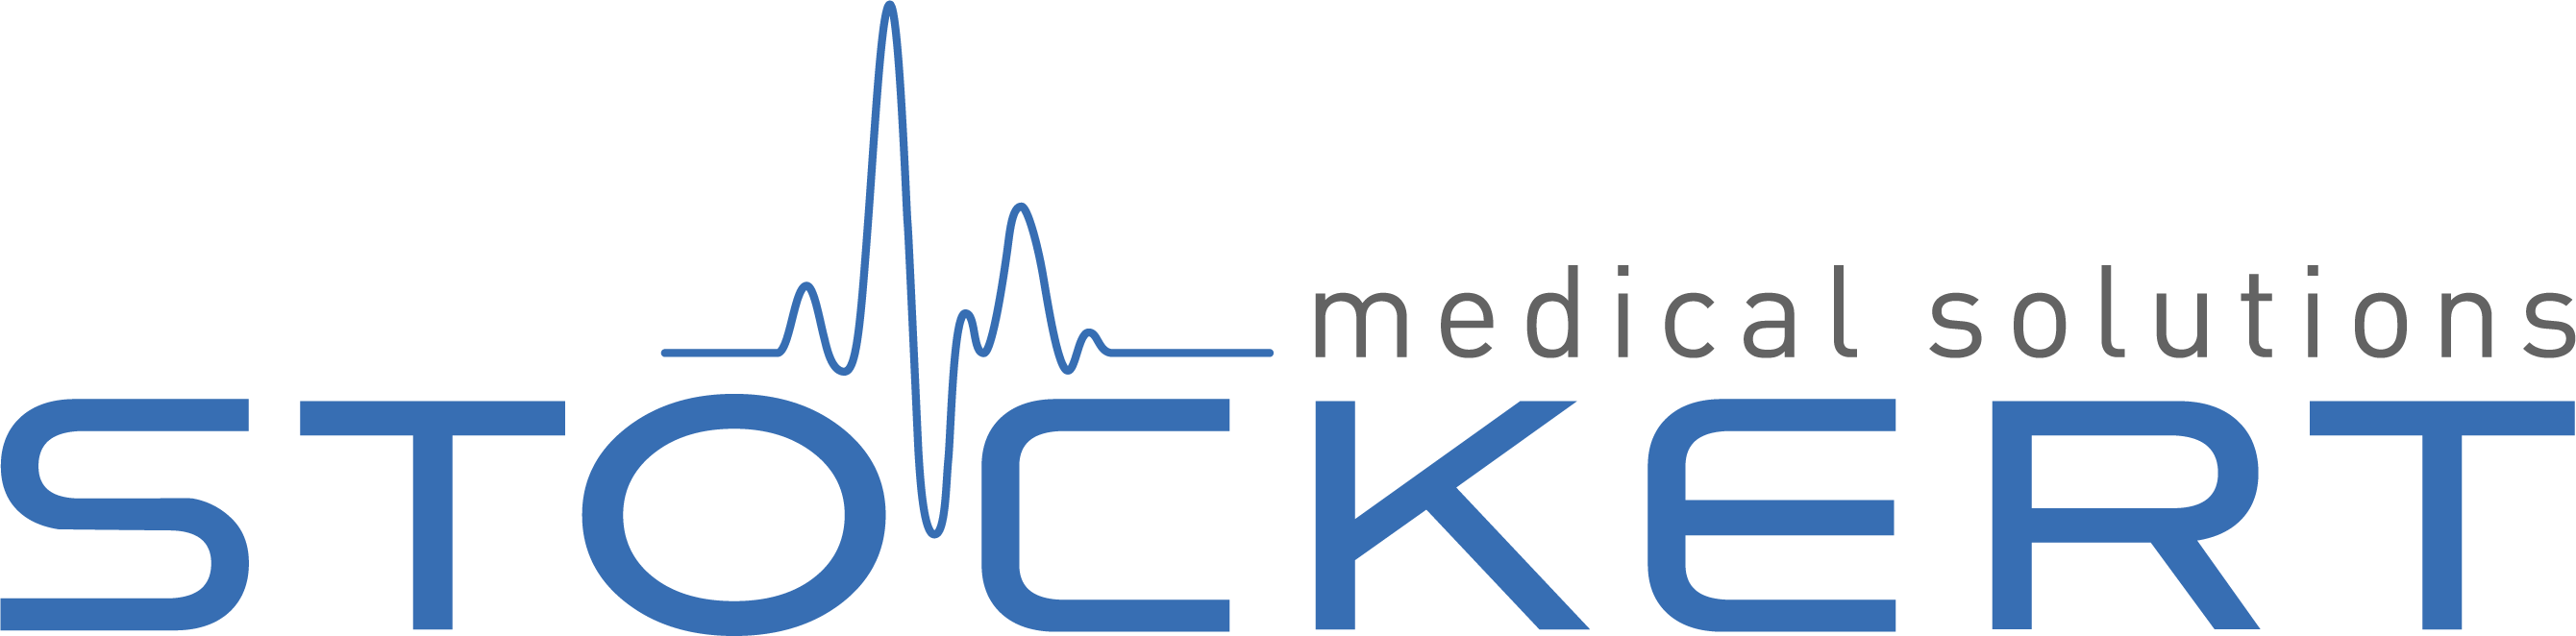 Stockert Logo